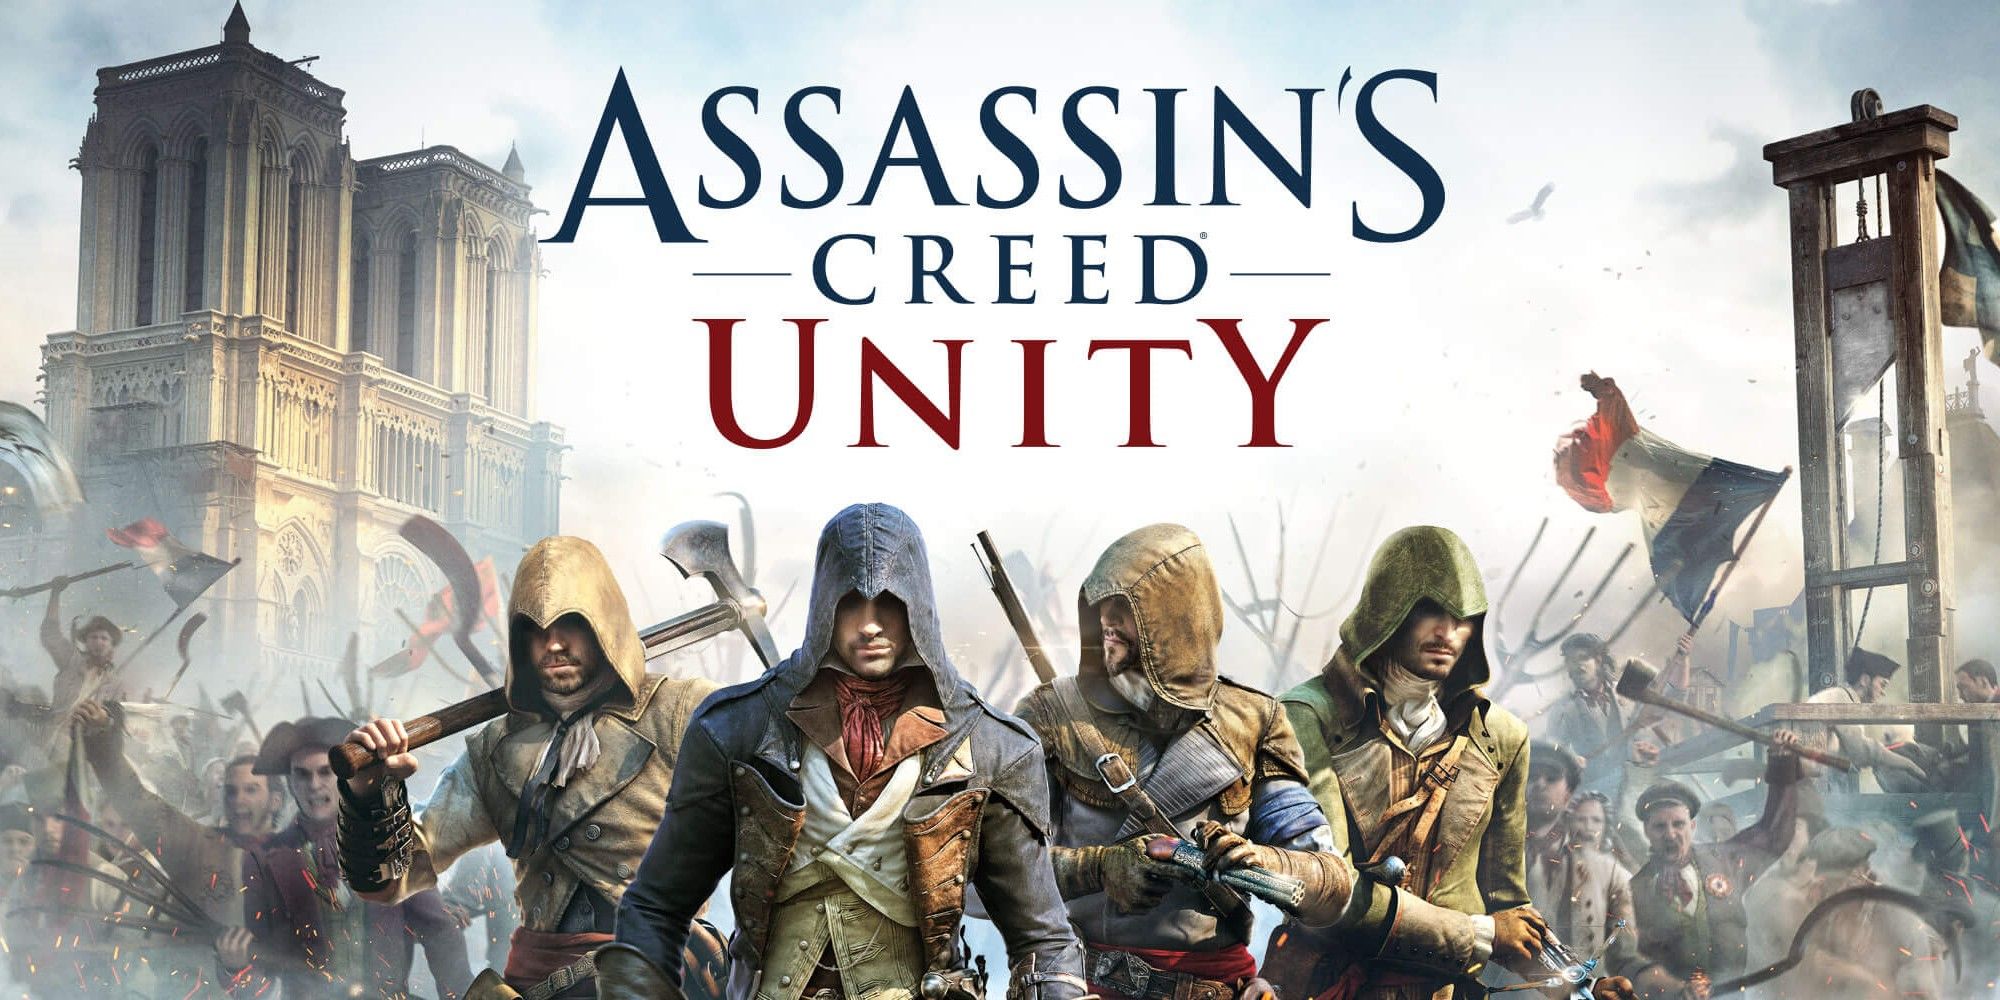 Assassin's Creed Unity lineup banner 4 assassins.